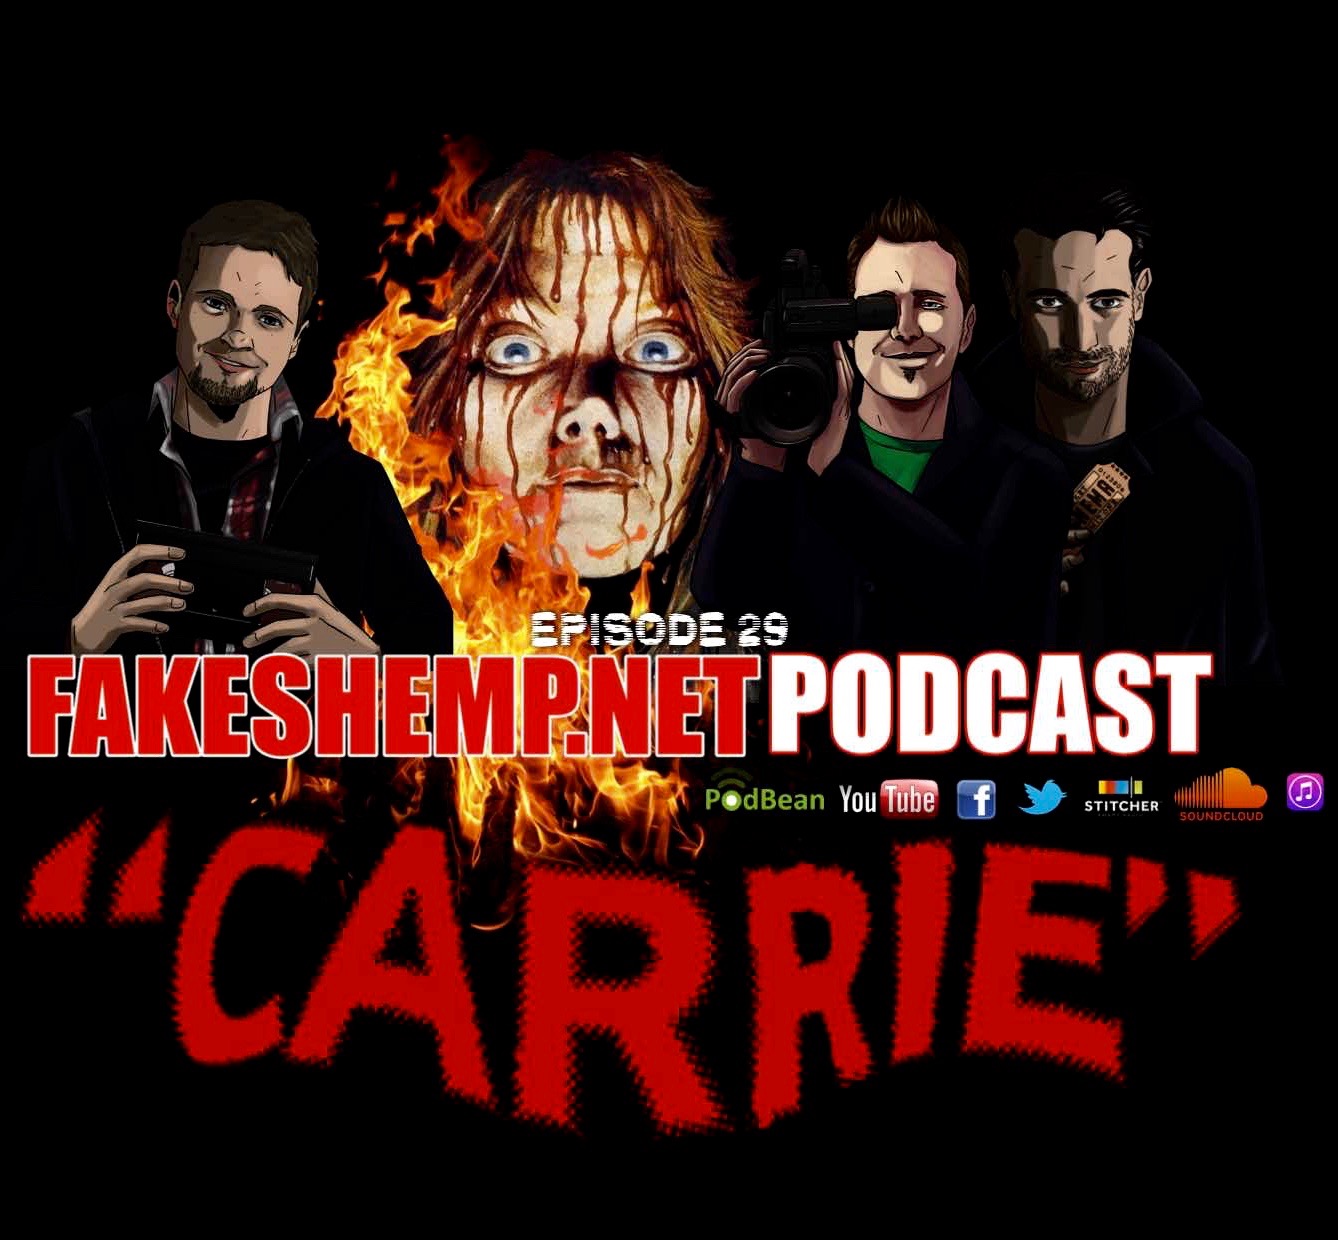 FakeShemp.Net Podcast #29 (Carrie)